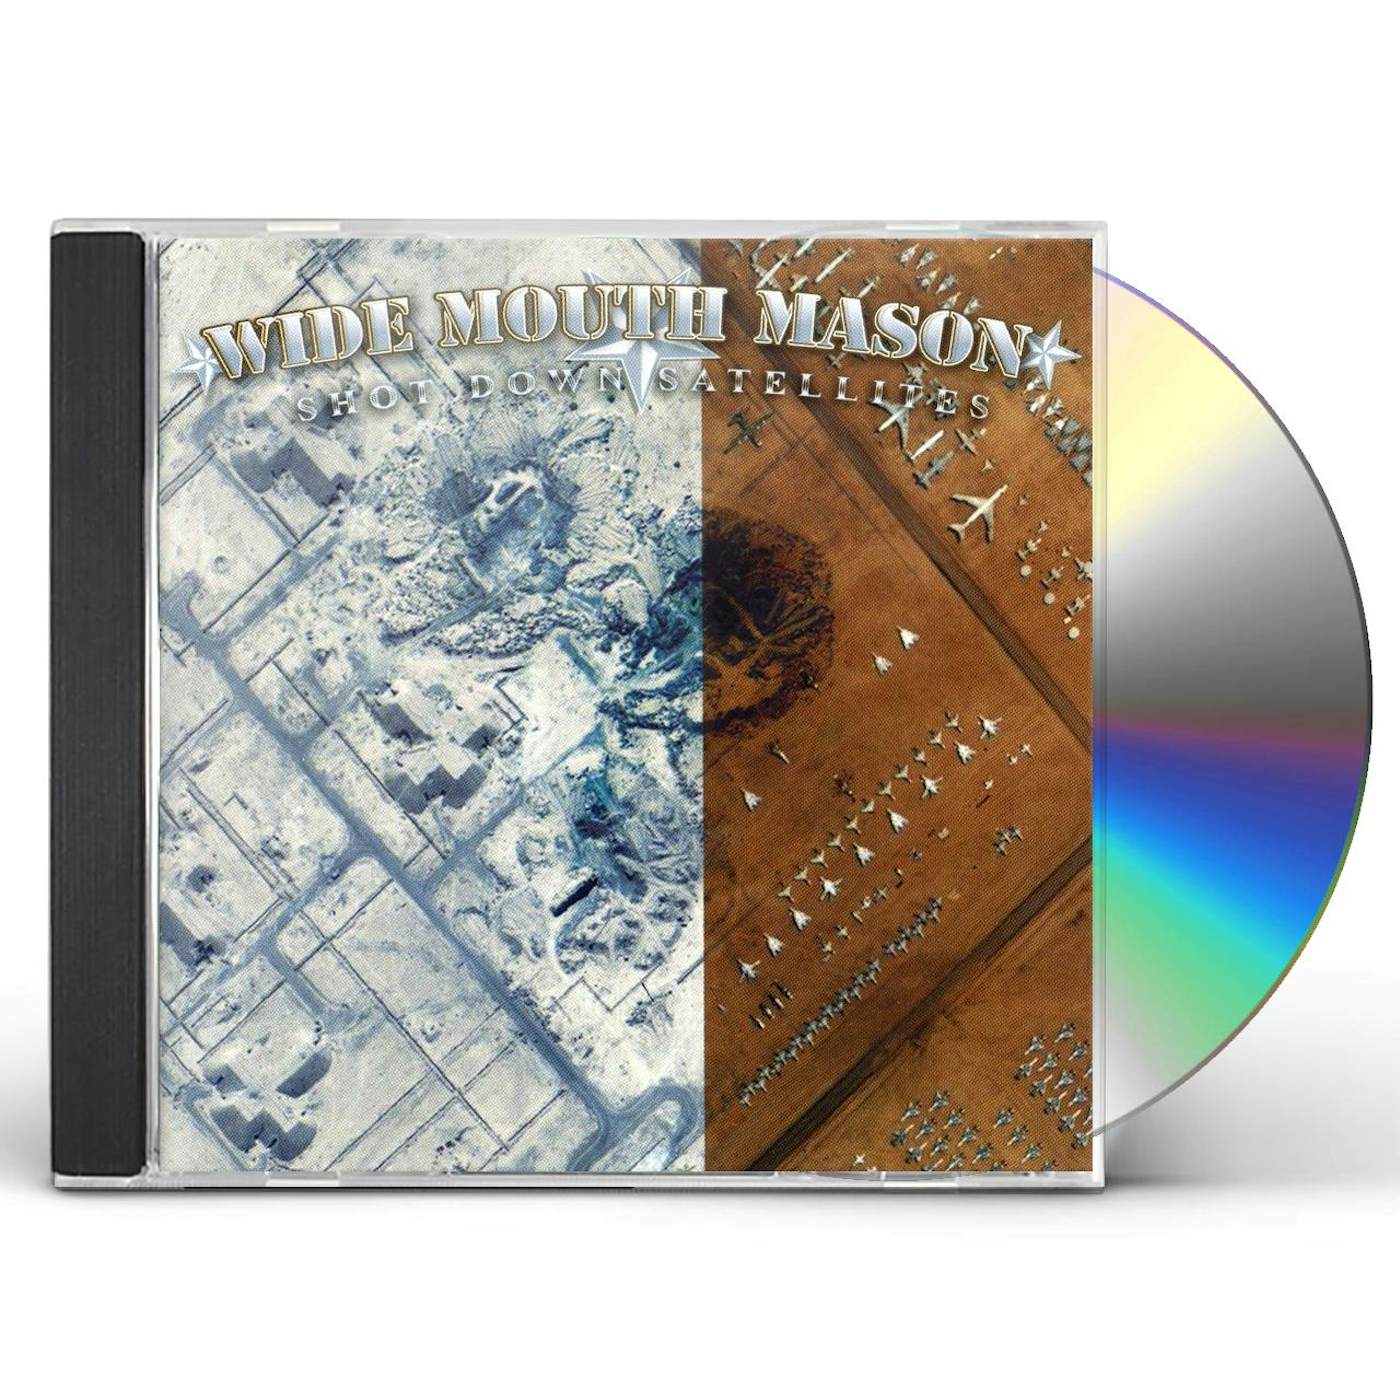 Wide Mouth Mason SHOT DOWN SATELLITES CD